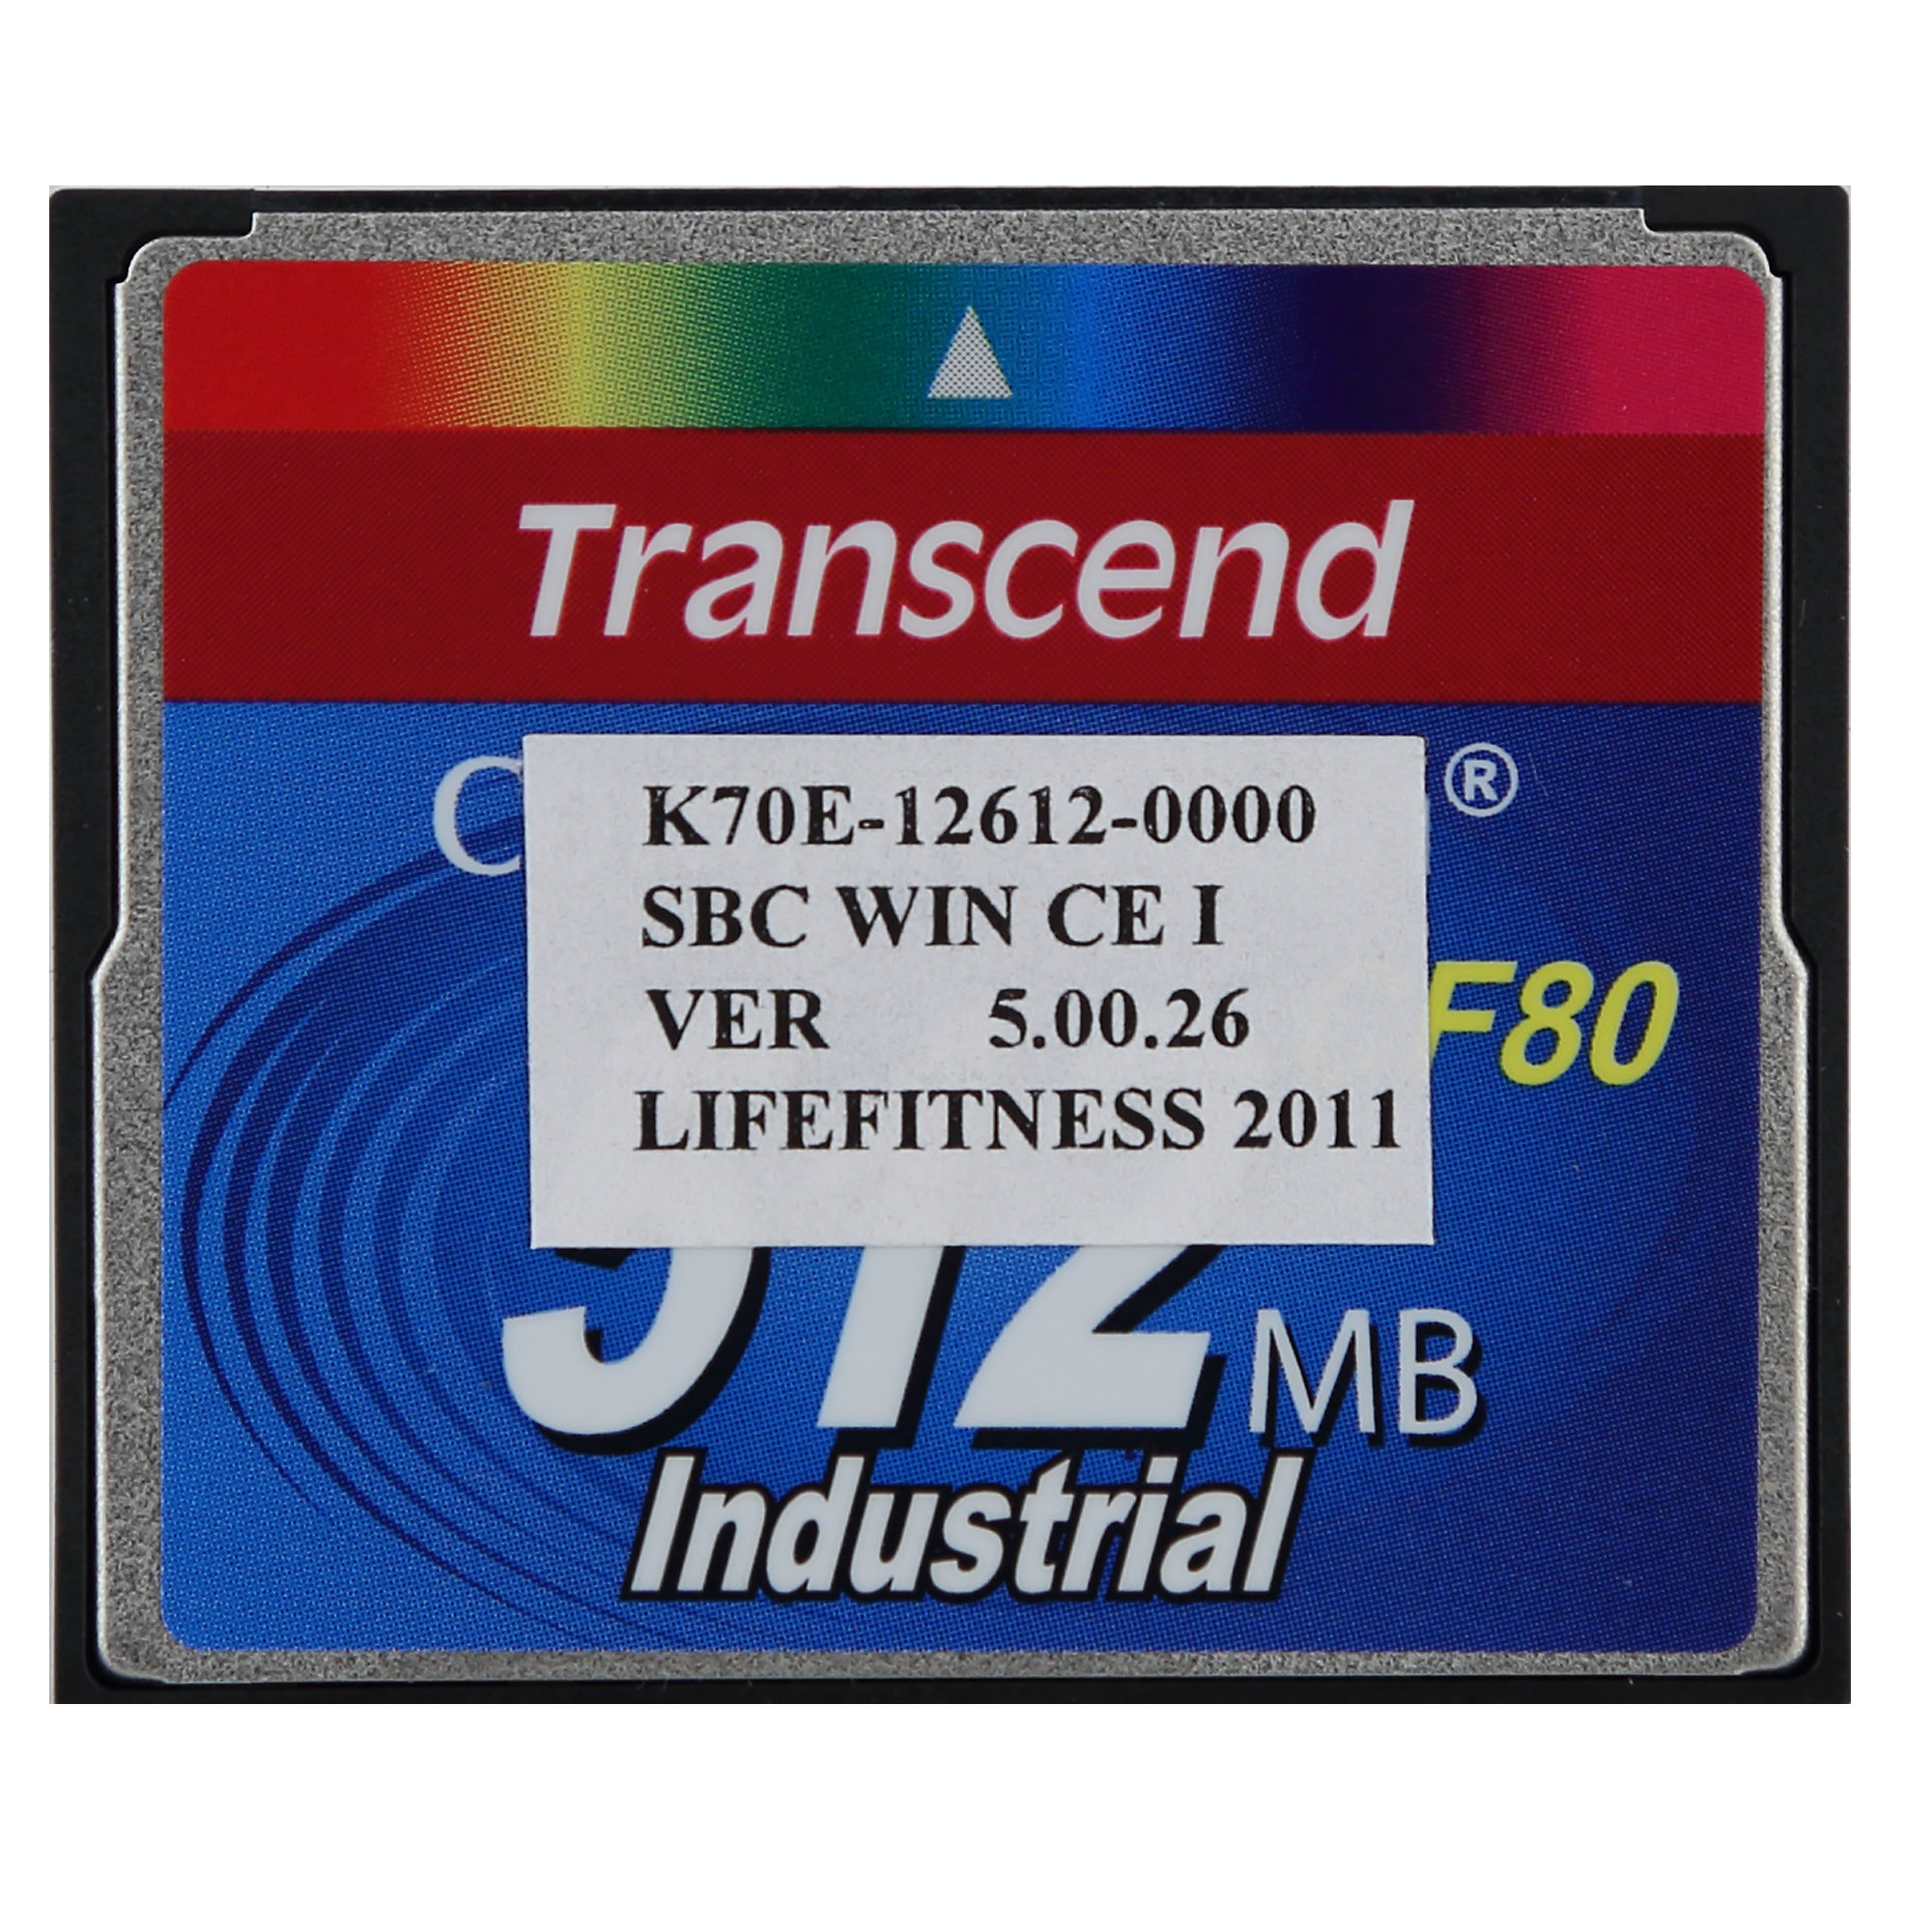 CF Card with Inspire OS Upgrade, LifeFitness